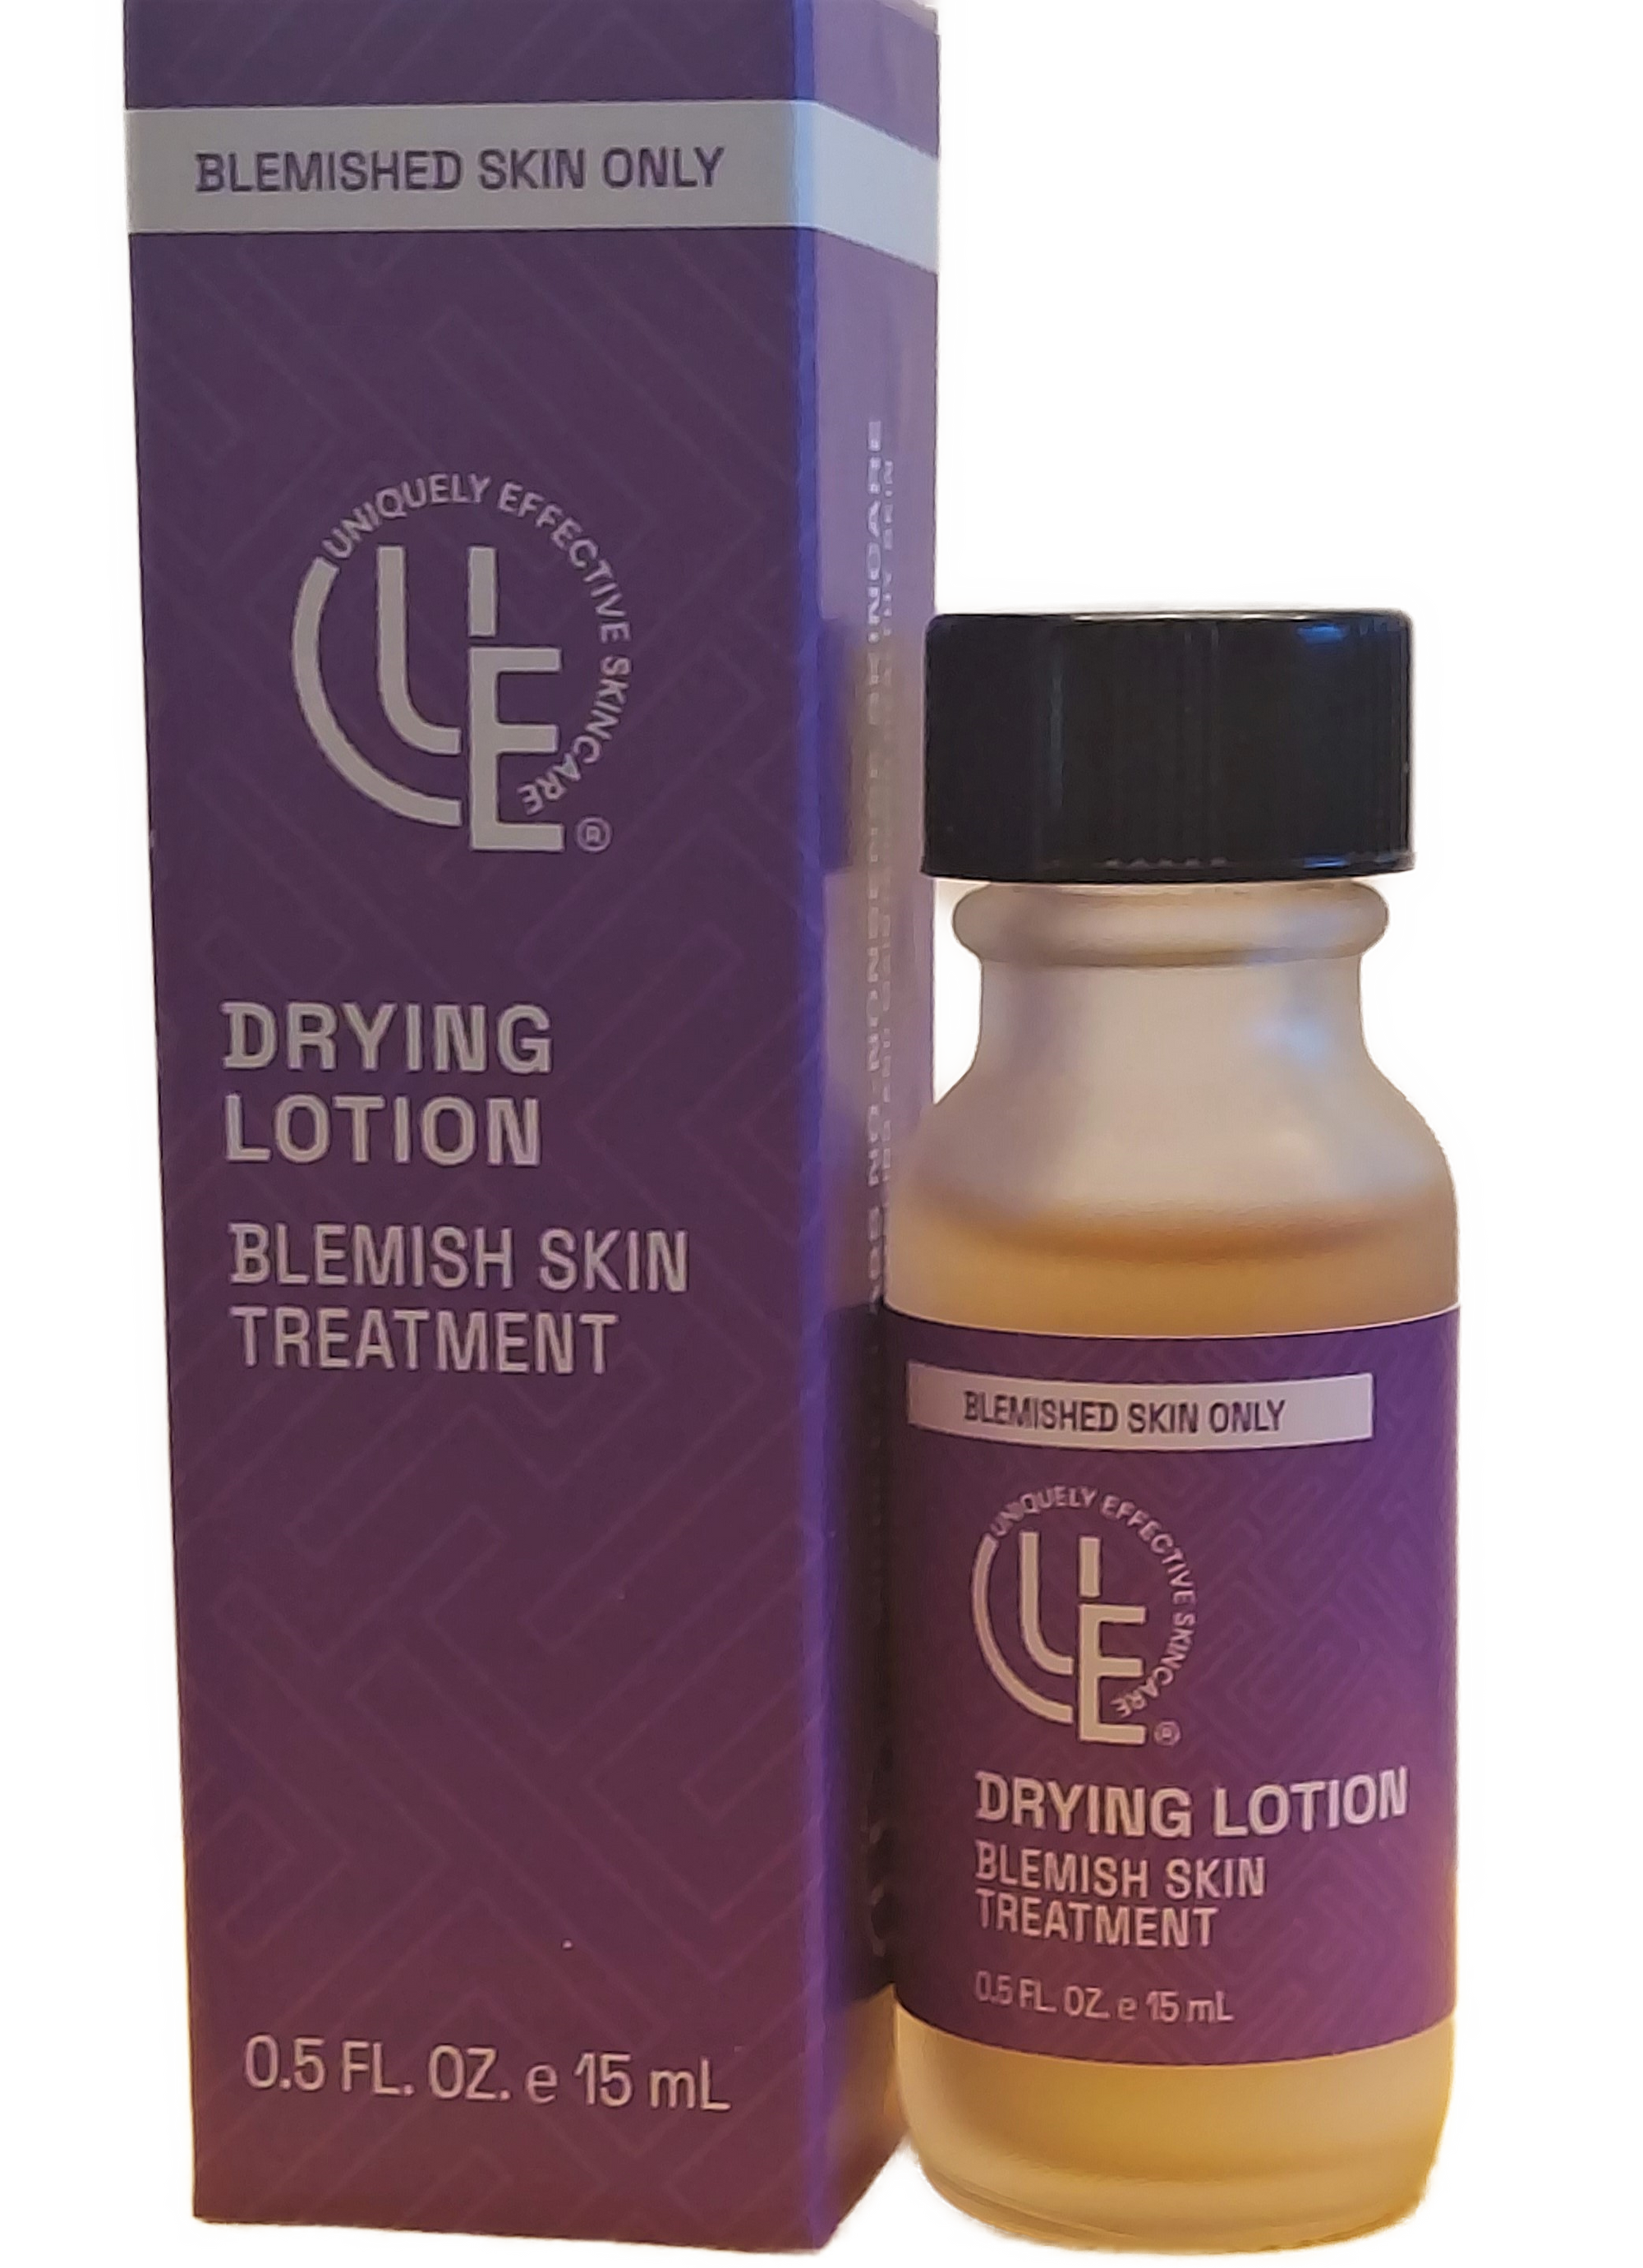 1/2 oz. bottle of Drying Lotion Blemished Skin Treatment for blemished skin only